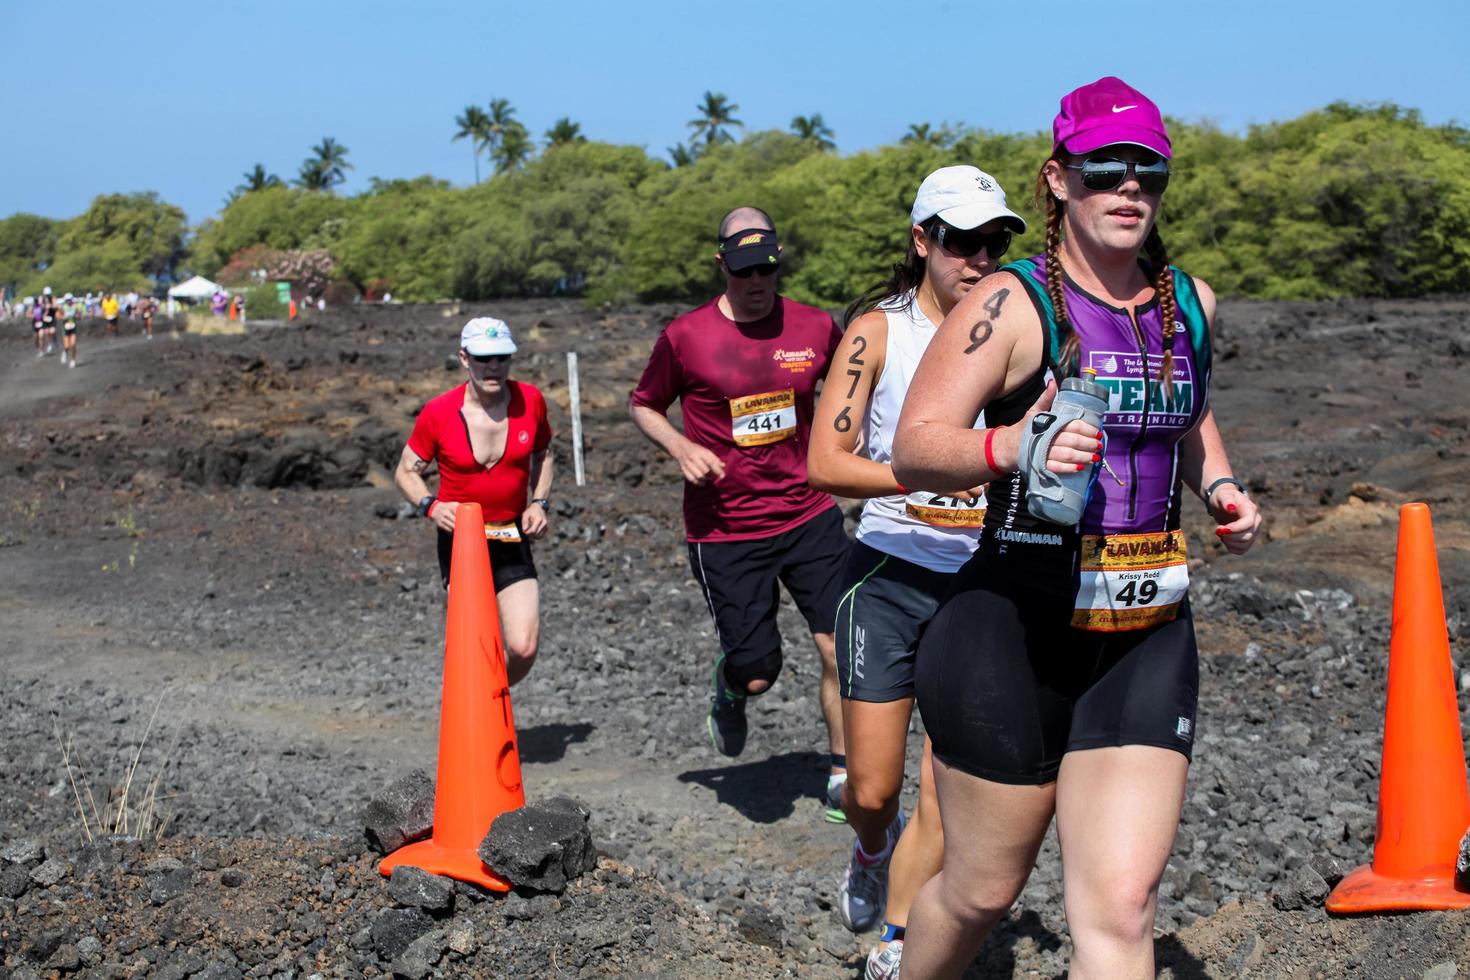 waikoloa, VS, 2011 - niet-geïdentificeerde lopers op de lavaman-triatlon in waikoloa, hawaii. het wordt gehouden in olympische vorm - 1,5 km zwemmen, 40 km fietsen en 10 km hardlopen. foto